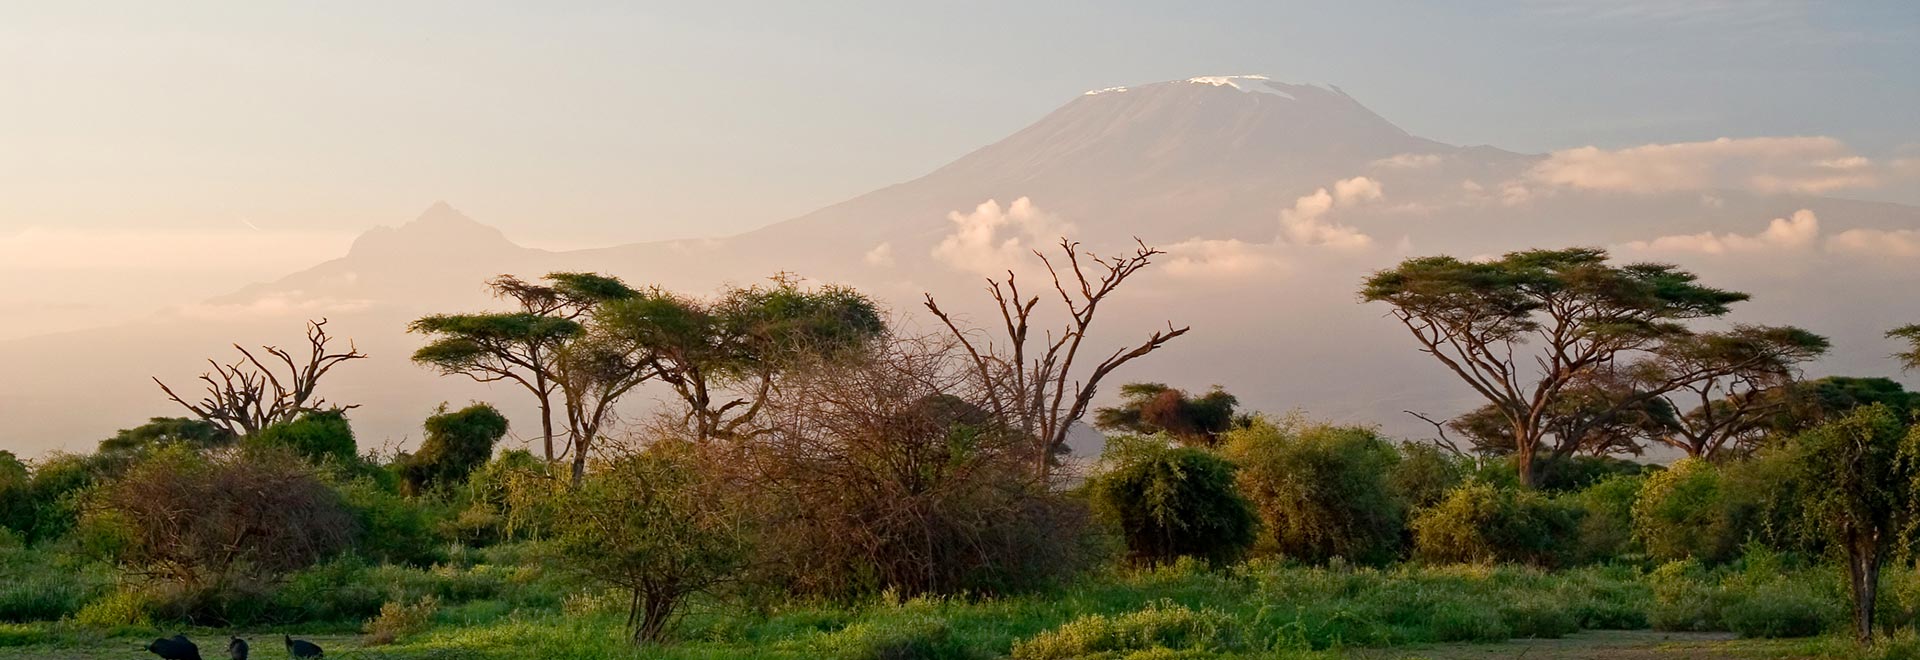 Africa Climb Kilimanjaro Summiting Machame Route MH